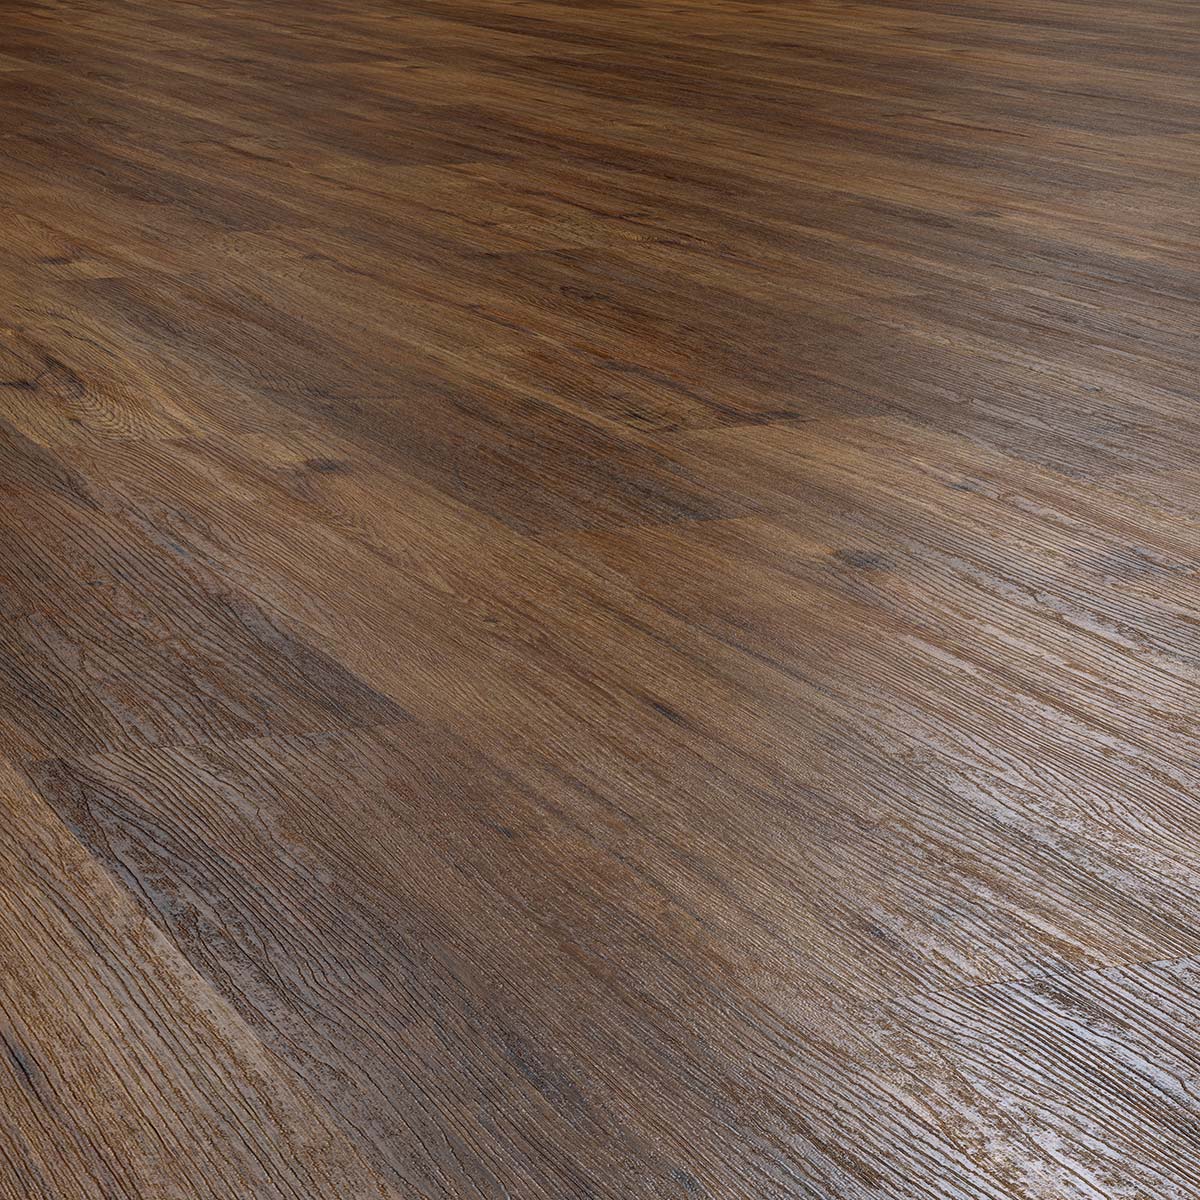 AClass Straight Plank LVT Flooring